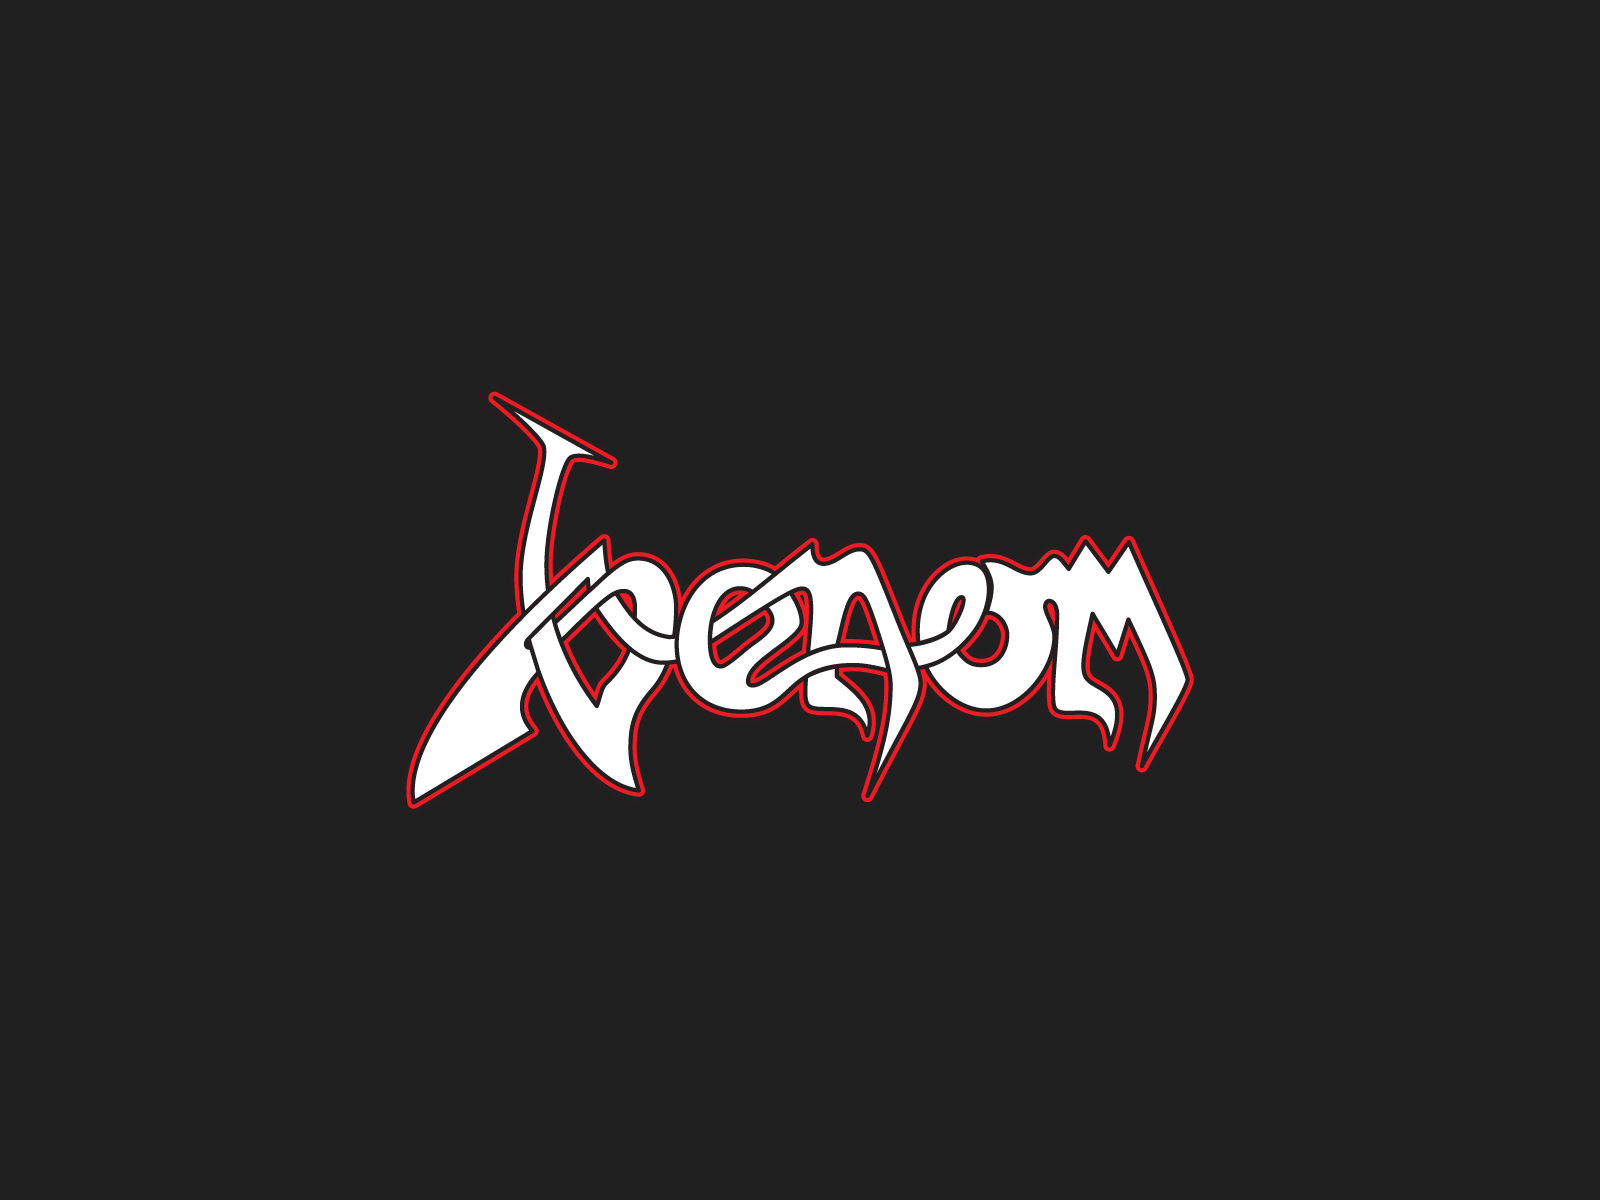 Venom logo and wallpaper. Band logos band logos, metal bands logos, punk bands logos